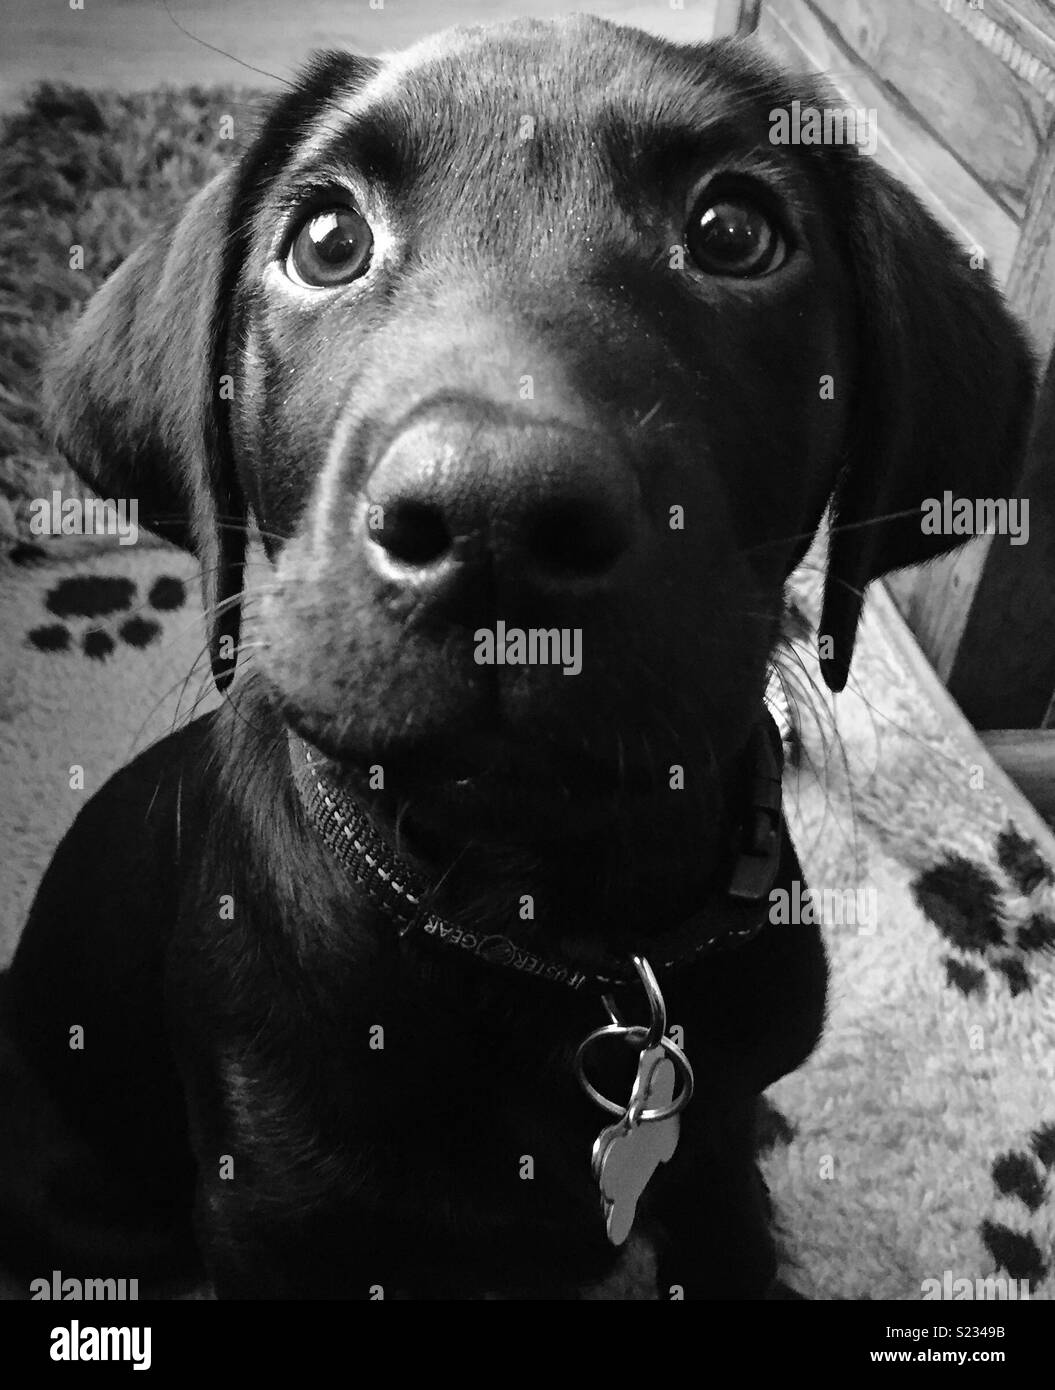 Black Labrador puppy with puppy dog eyes Stock Photo